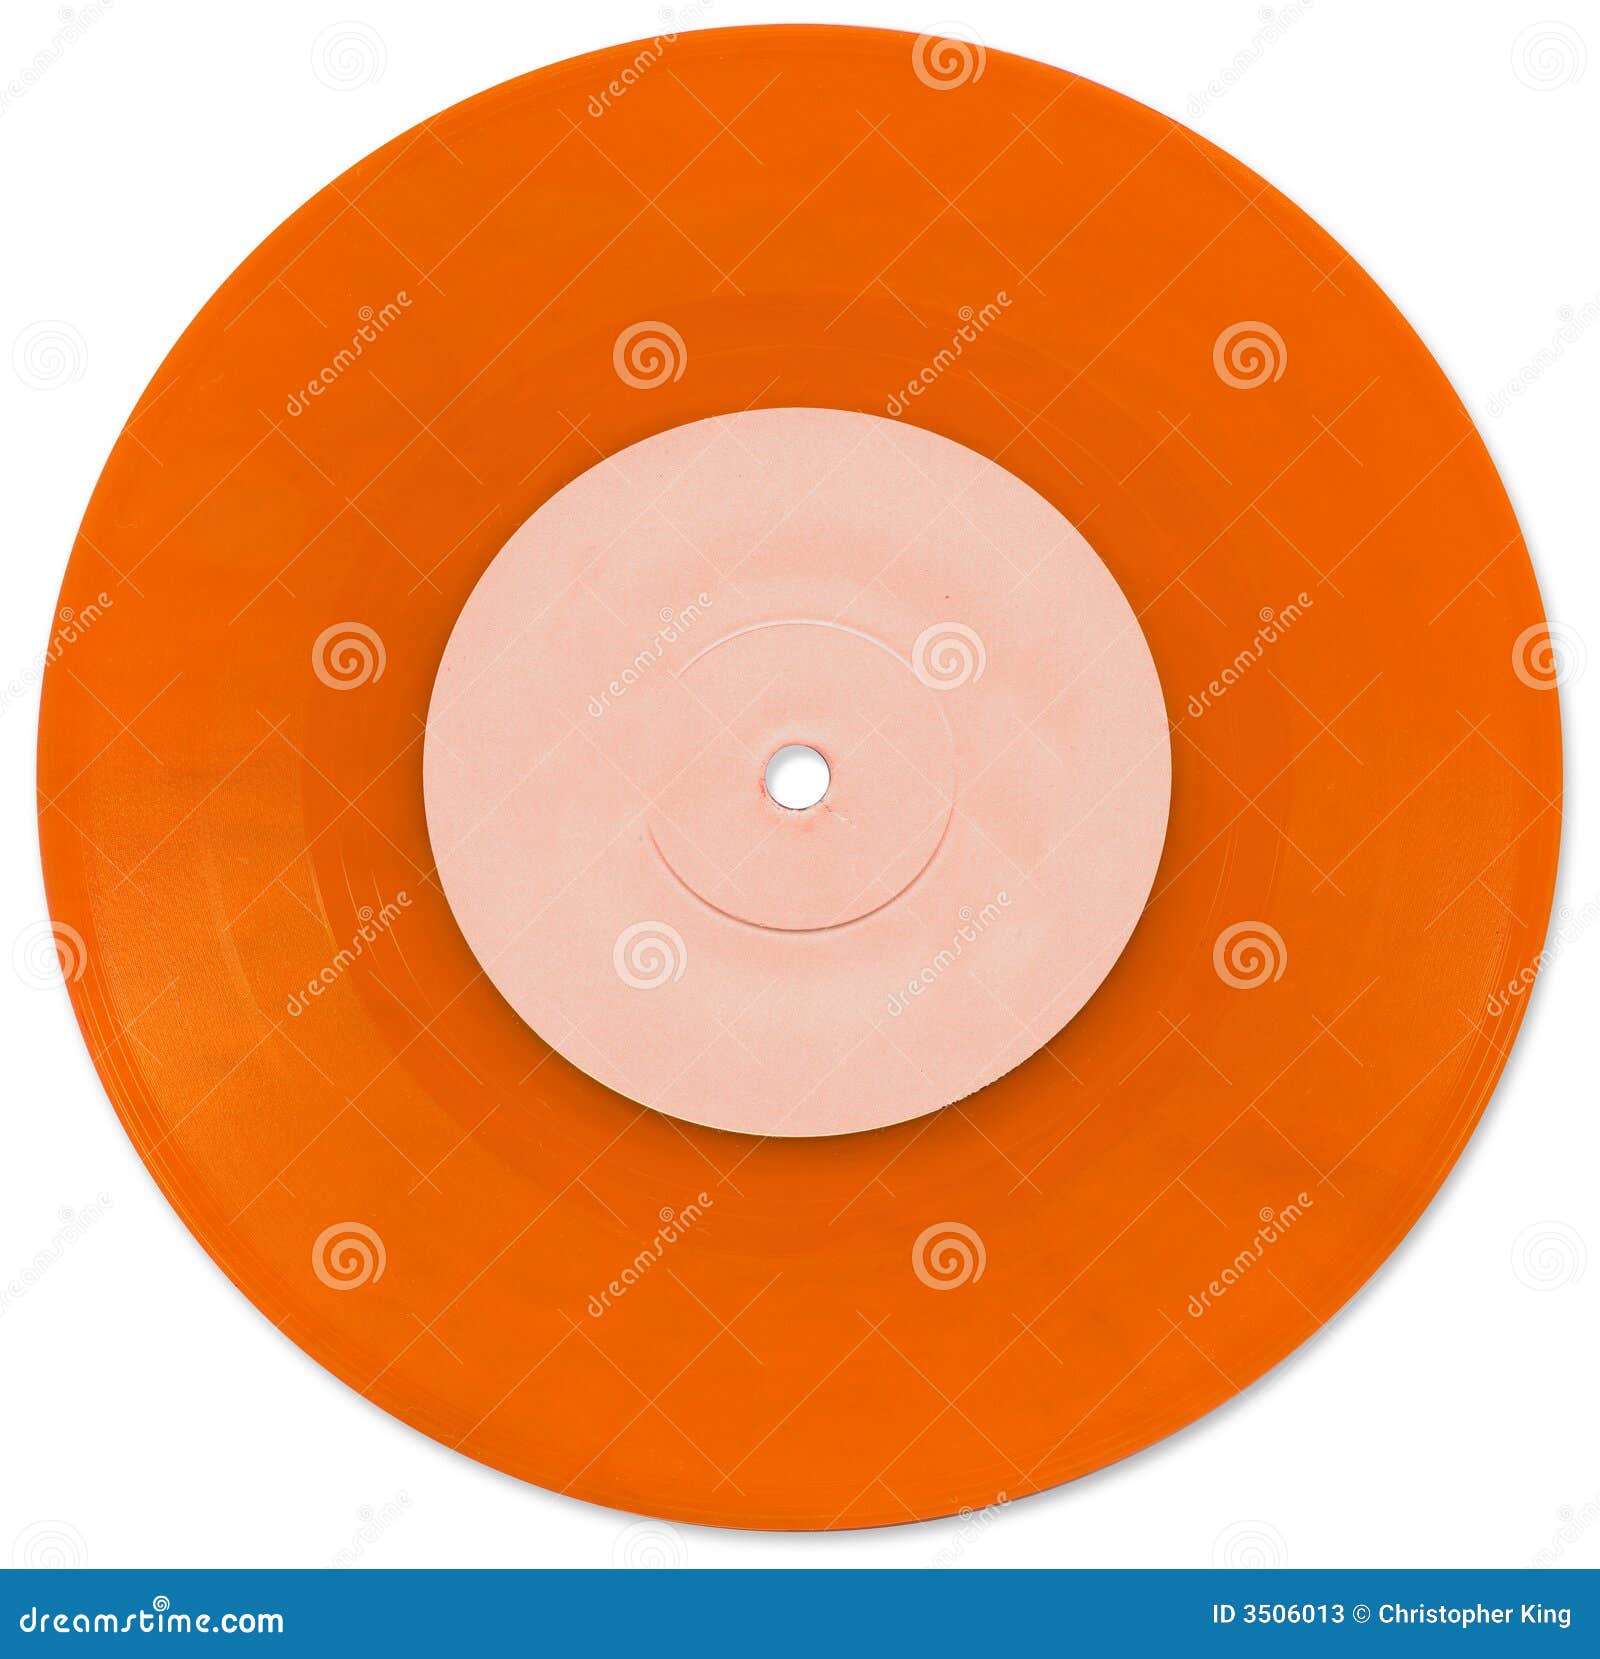 orange 7 inch vinyl single